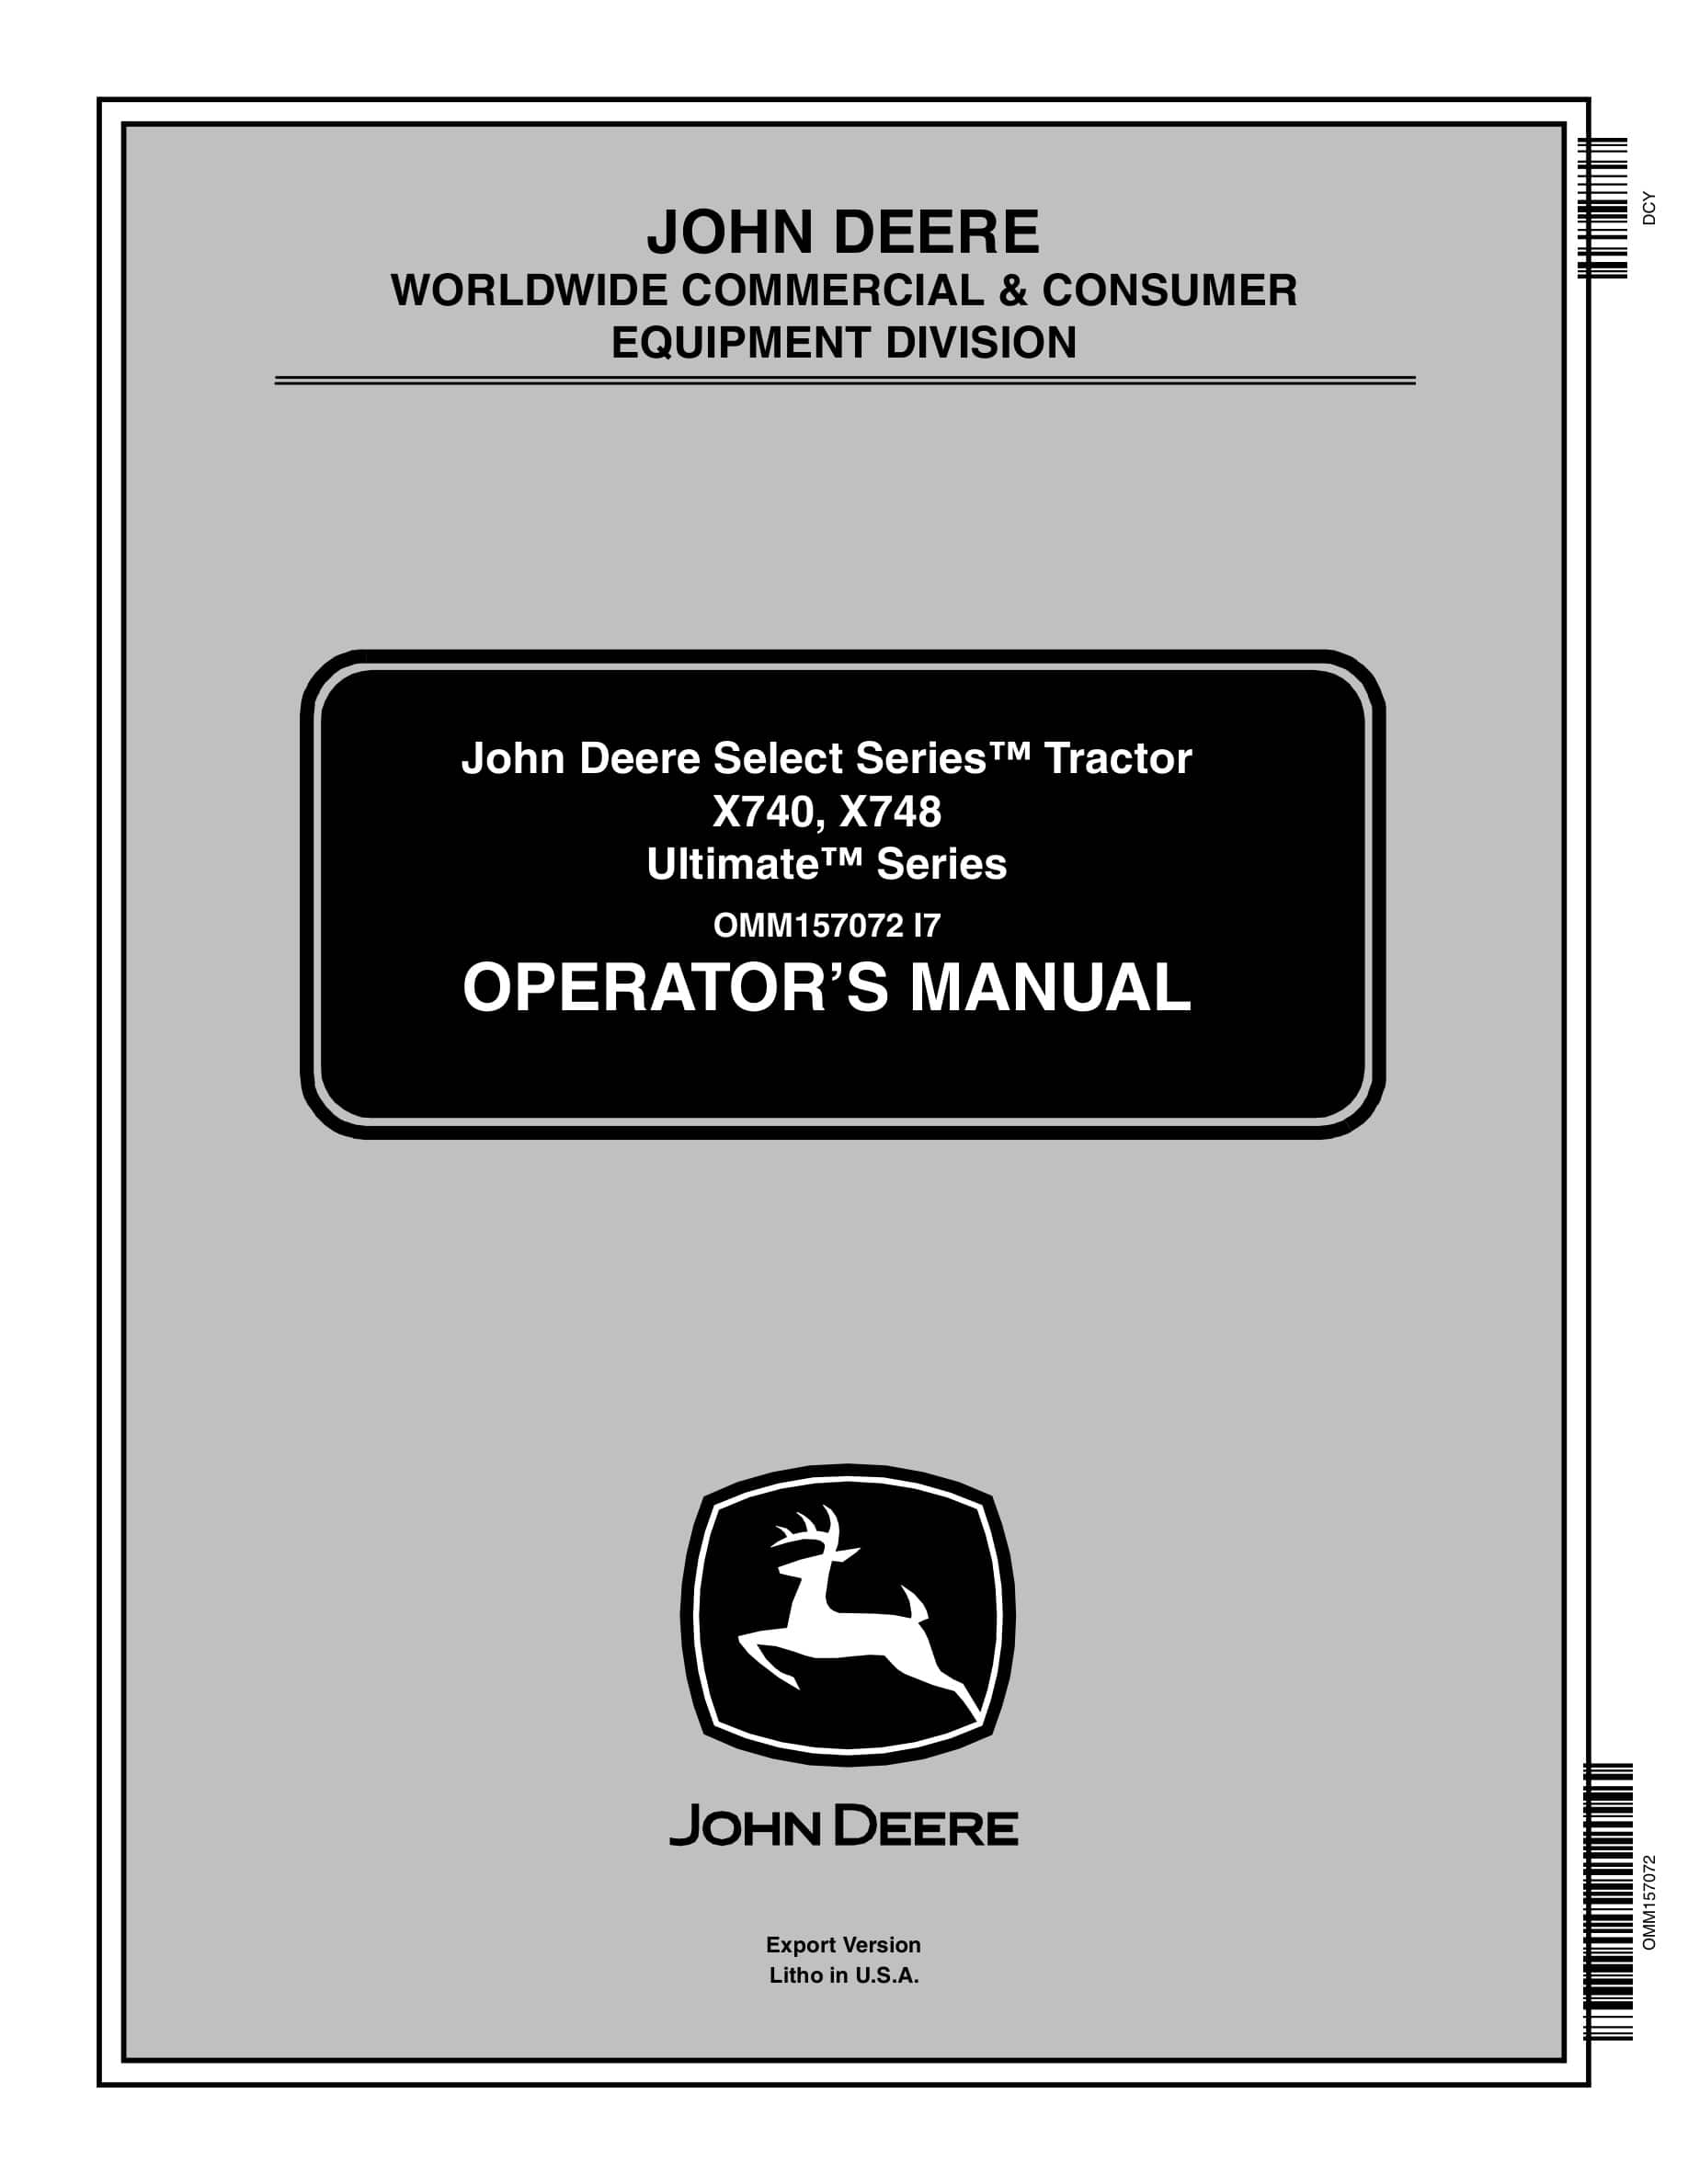 John Deere X740, X748 Select Series Tractors Operator Manual OMM157072-1